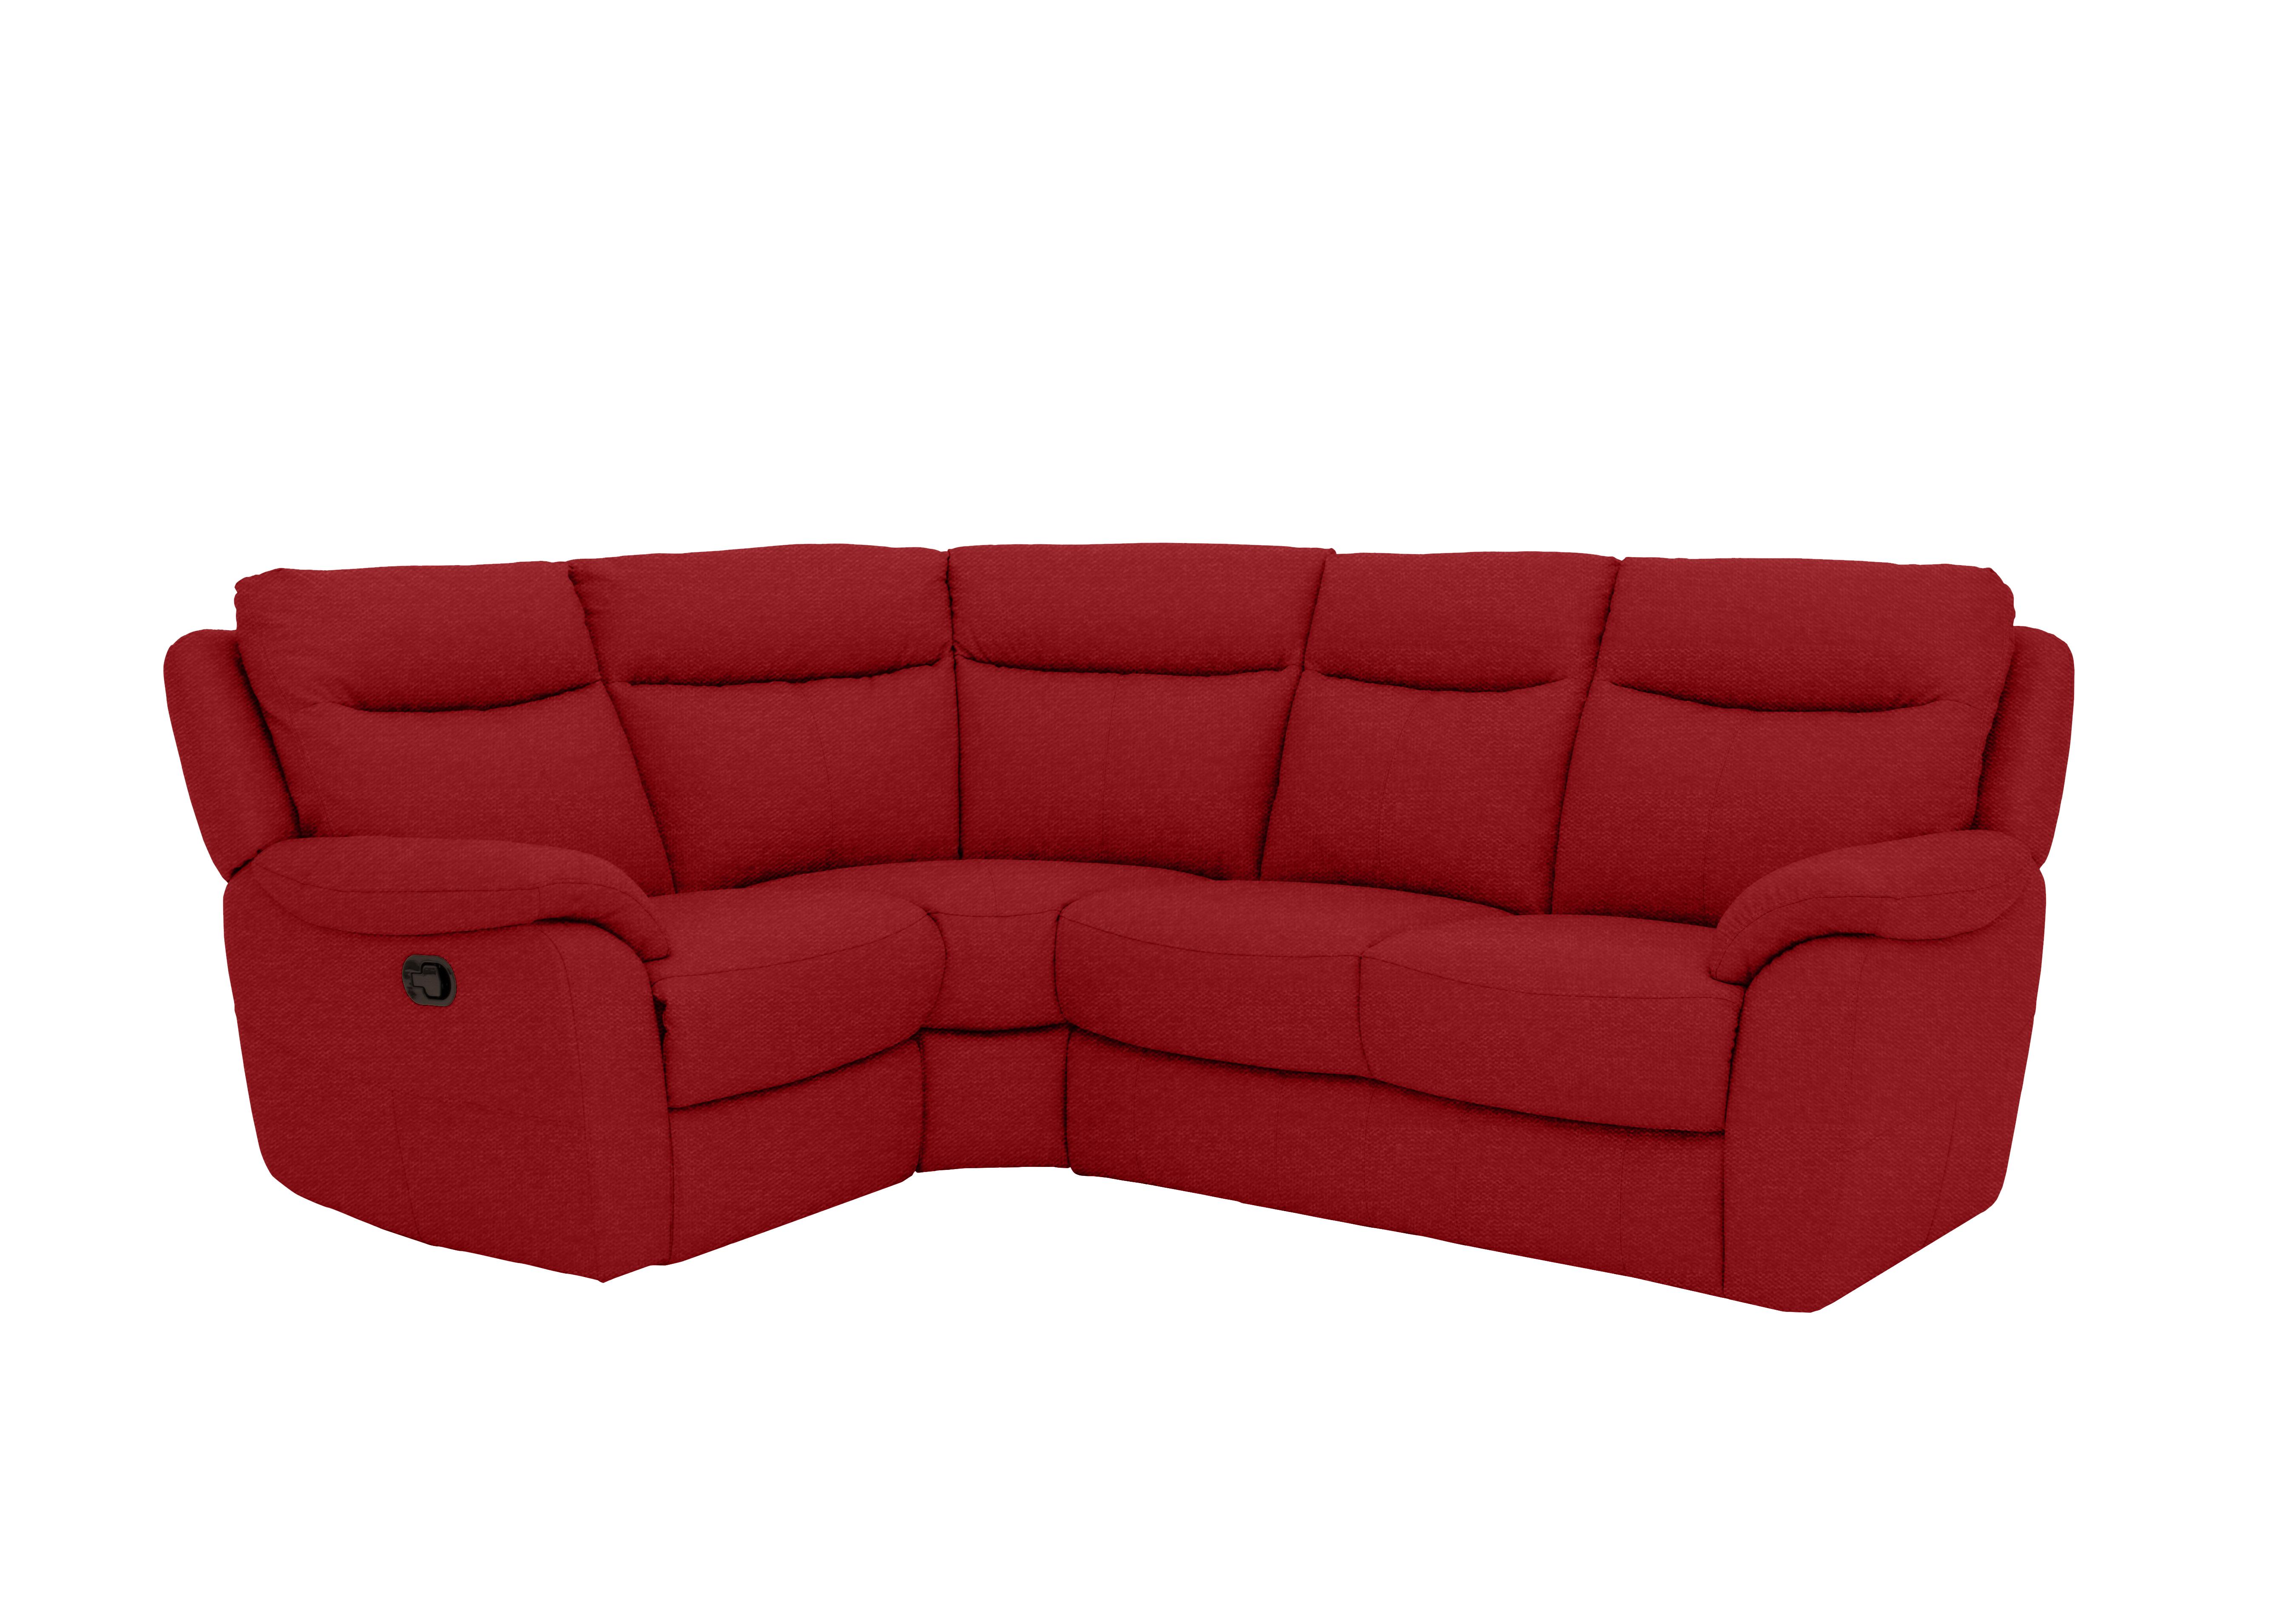 Snug Compact Fabric Corner Sofa in Fab-Blt-R29 Red on Furniture Village